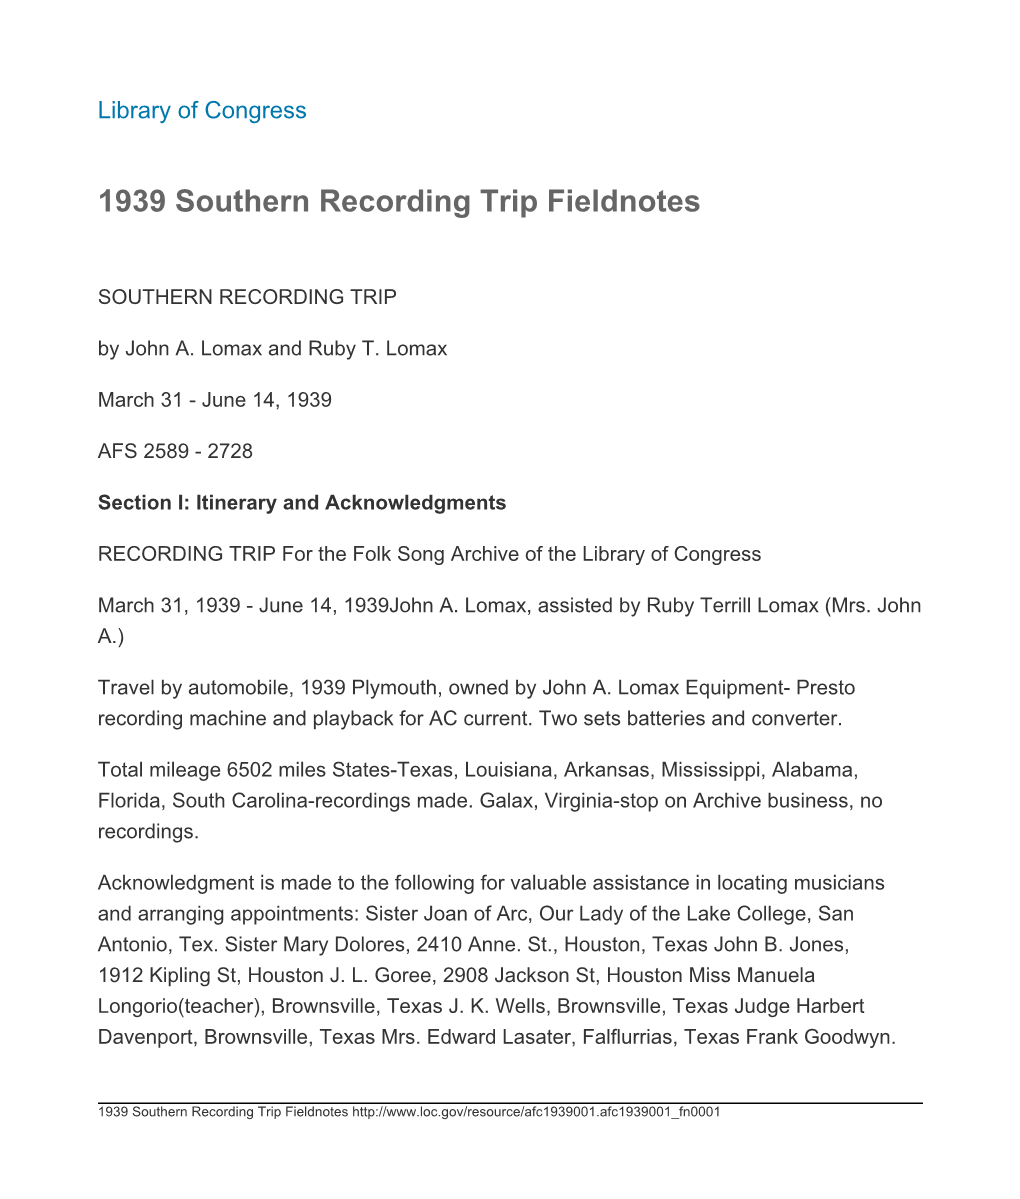 1939 Southern Recording Trip Fieldnotes